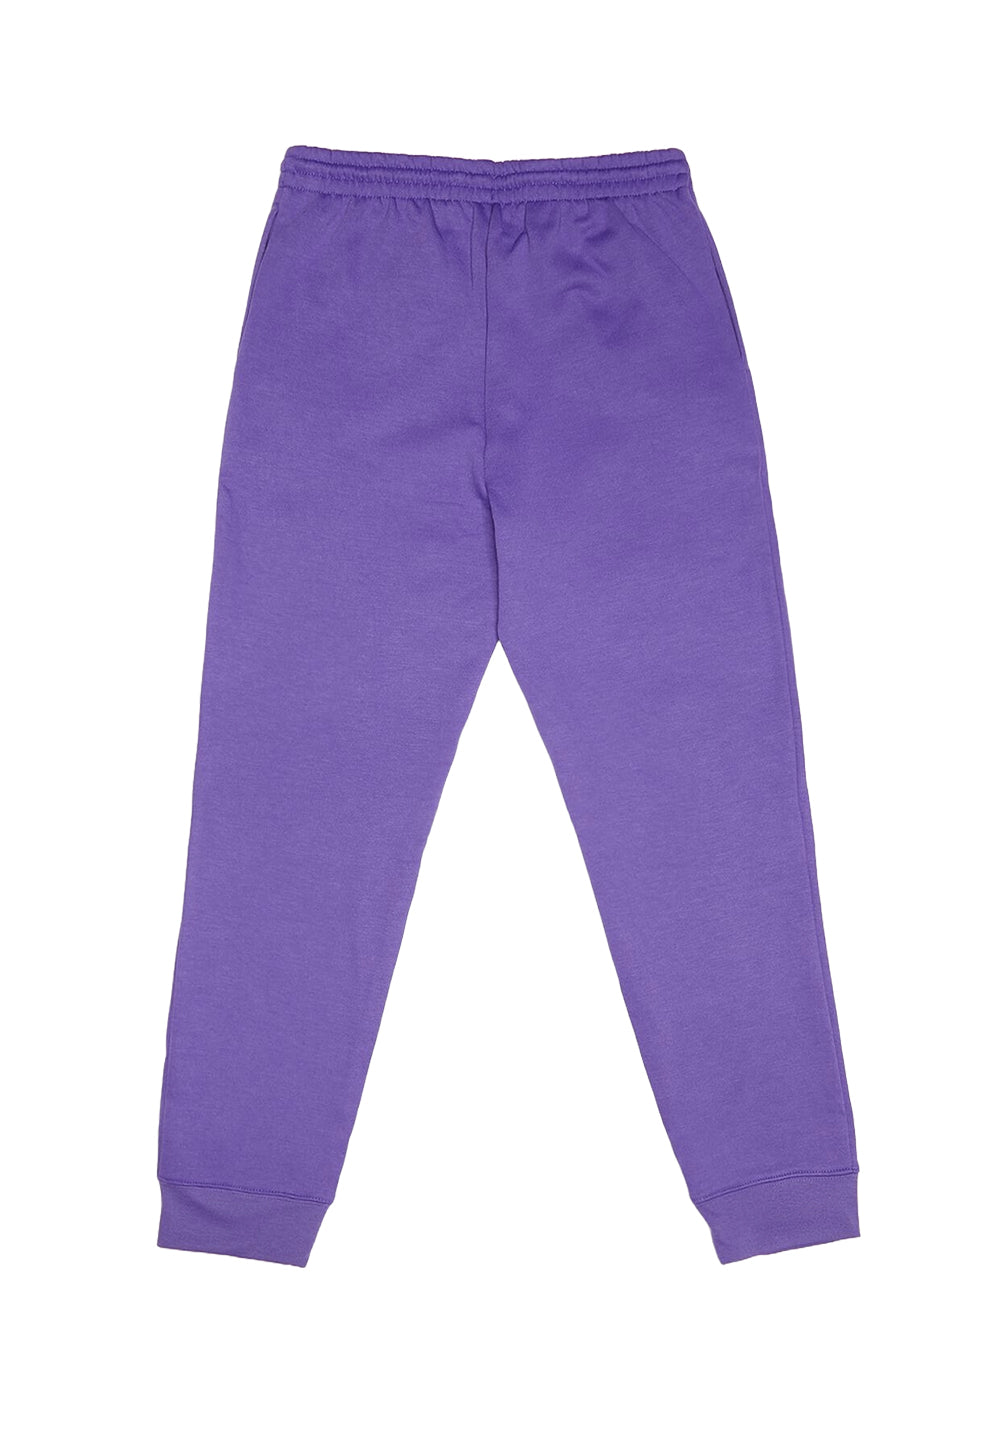 Purple sweatpants for boys